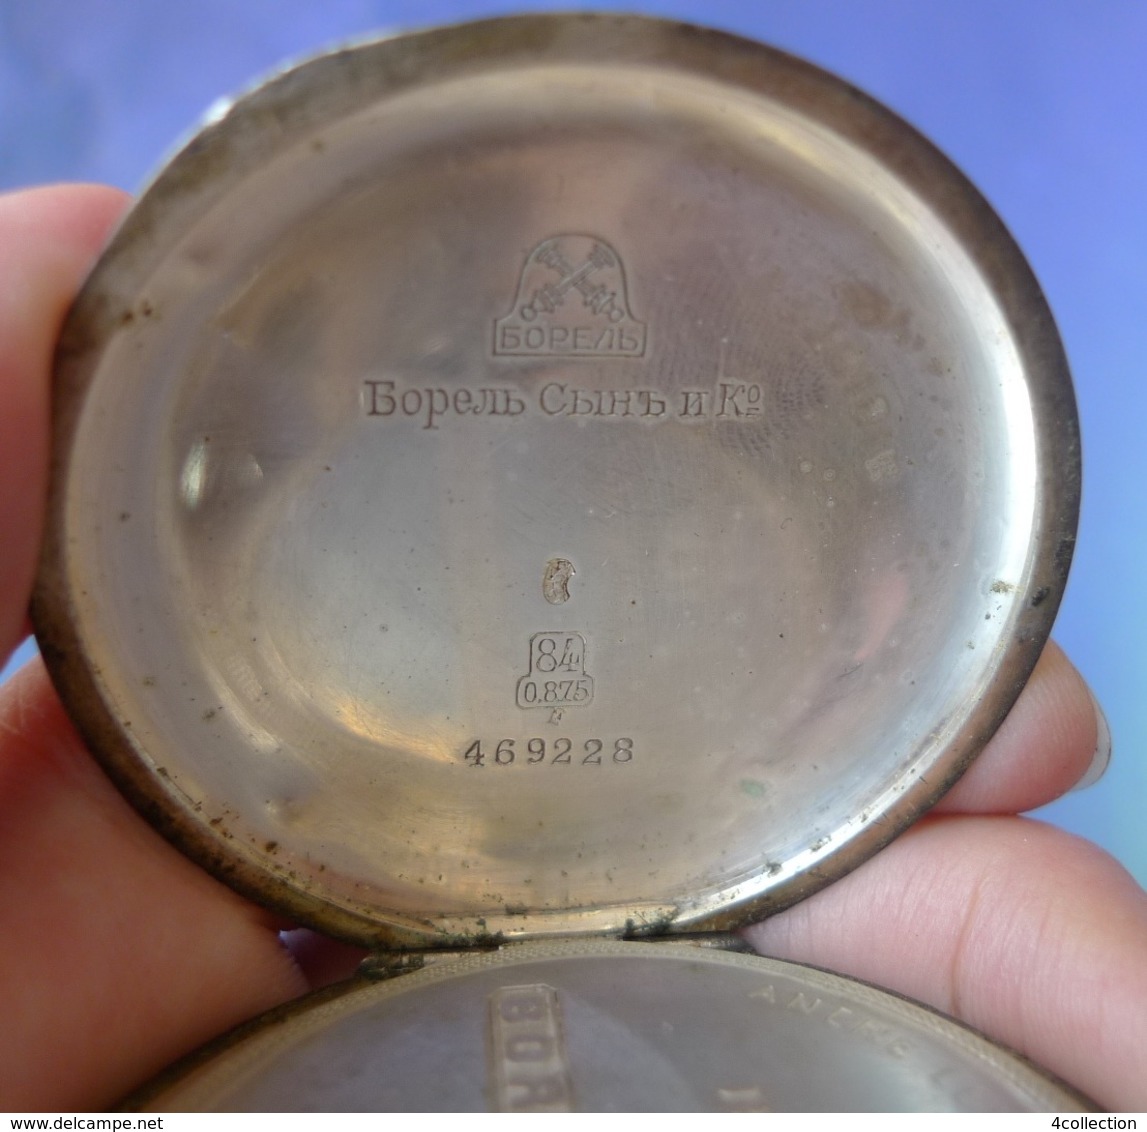 Antique BOREL FILS 15 Rubis Original Silver Pocket Watch #469228 Switzerland for Russia Empire